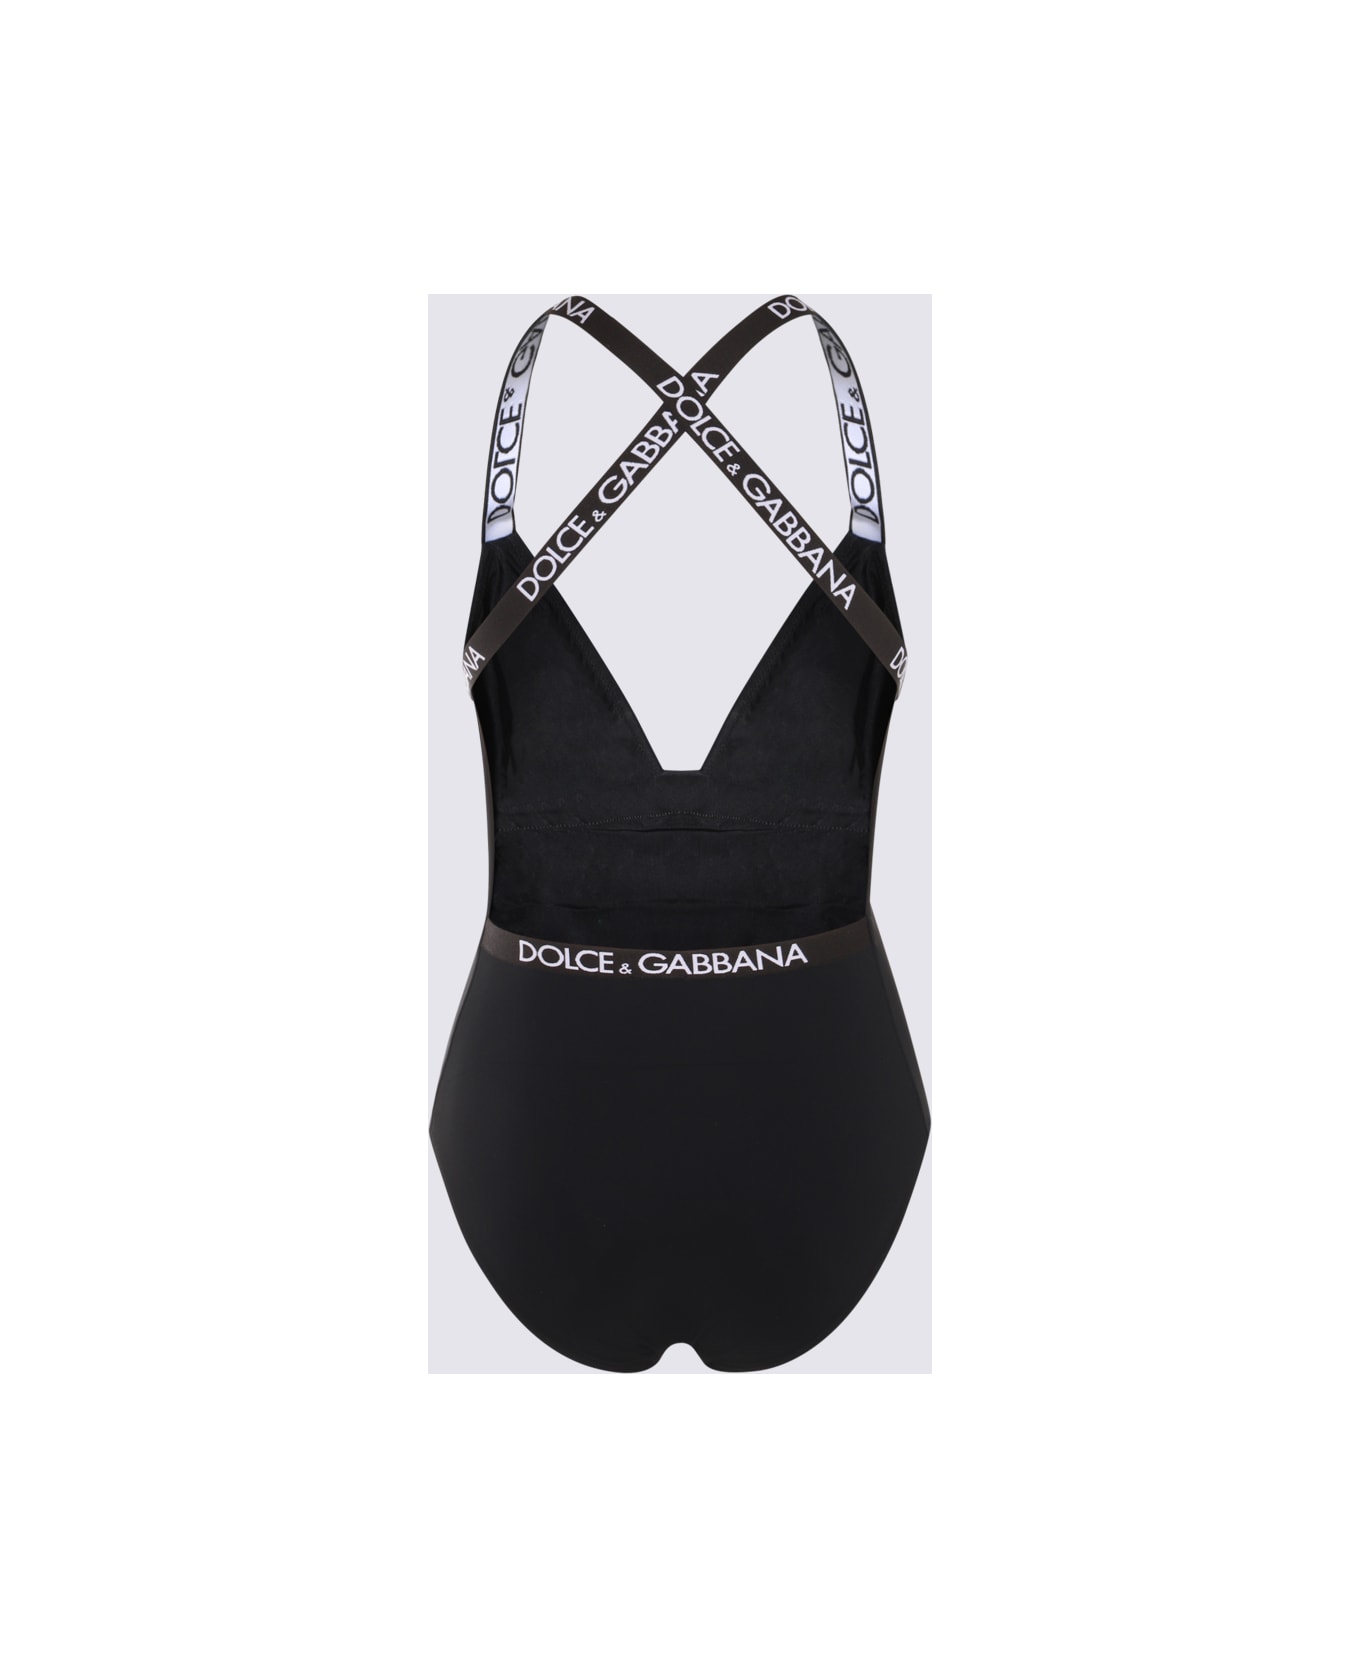 Dolce & Gabbana Black And White Swimsuit - Black